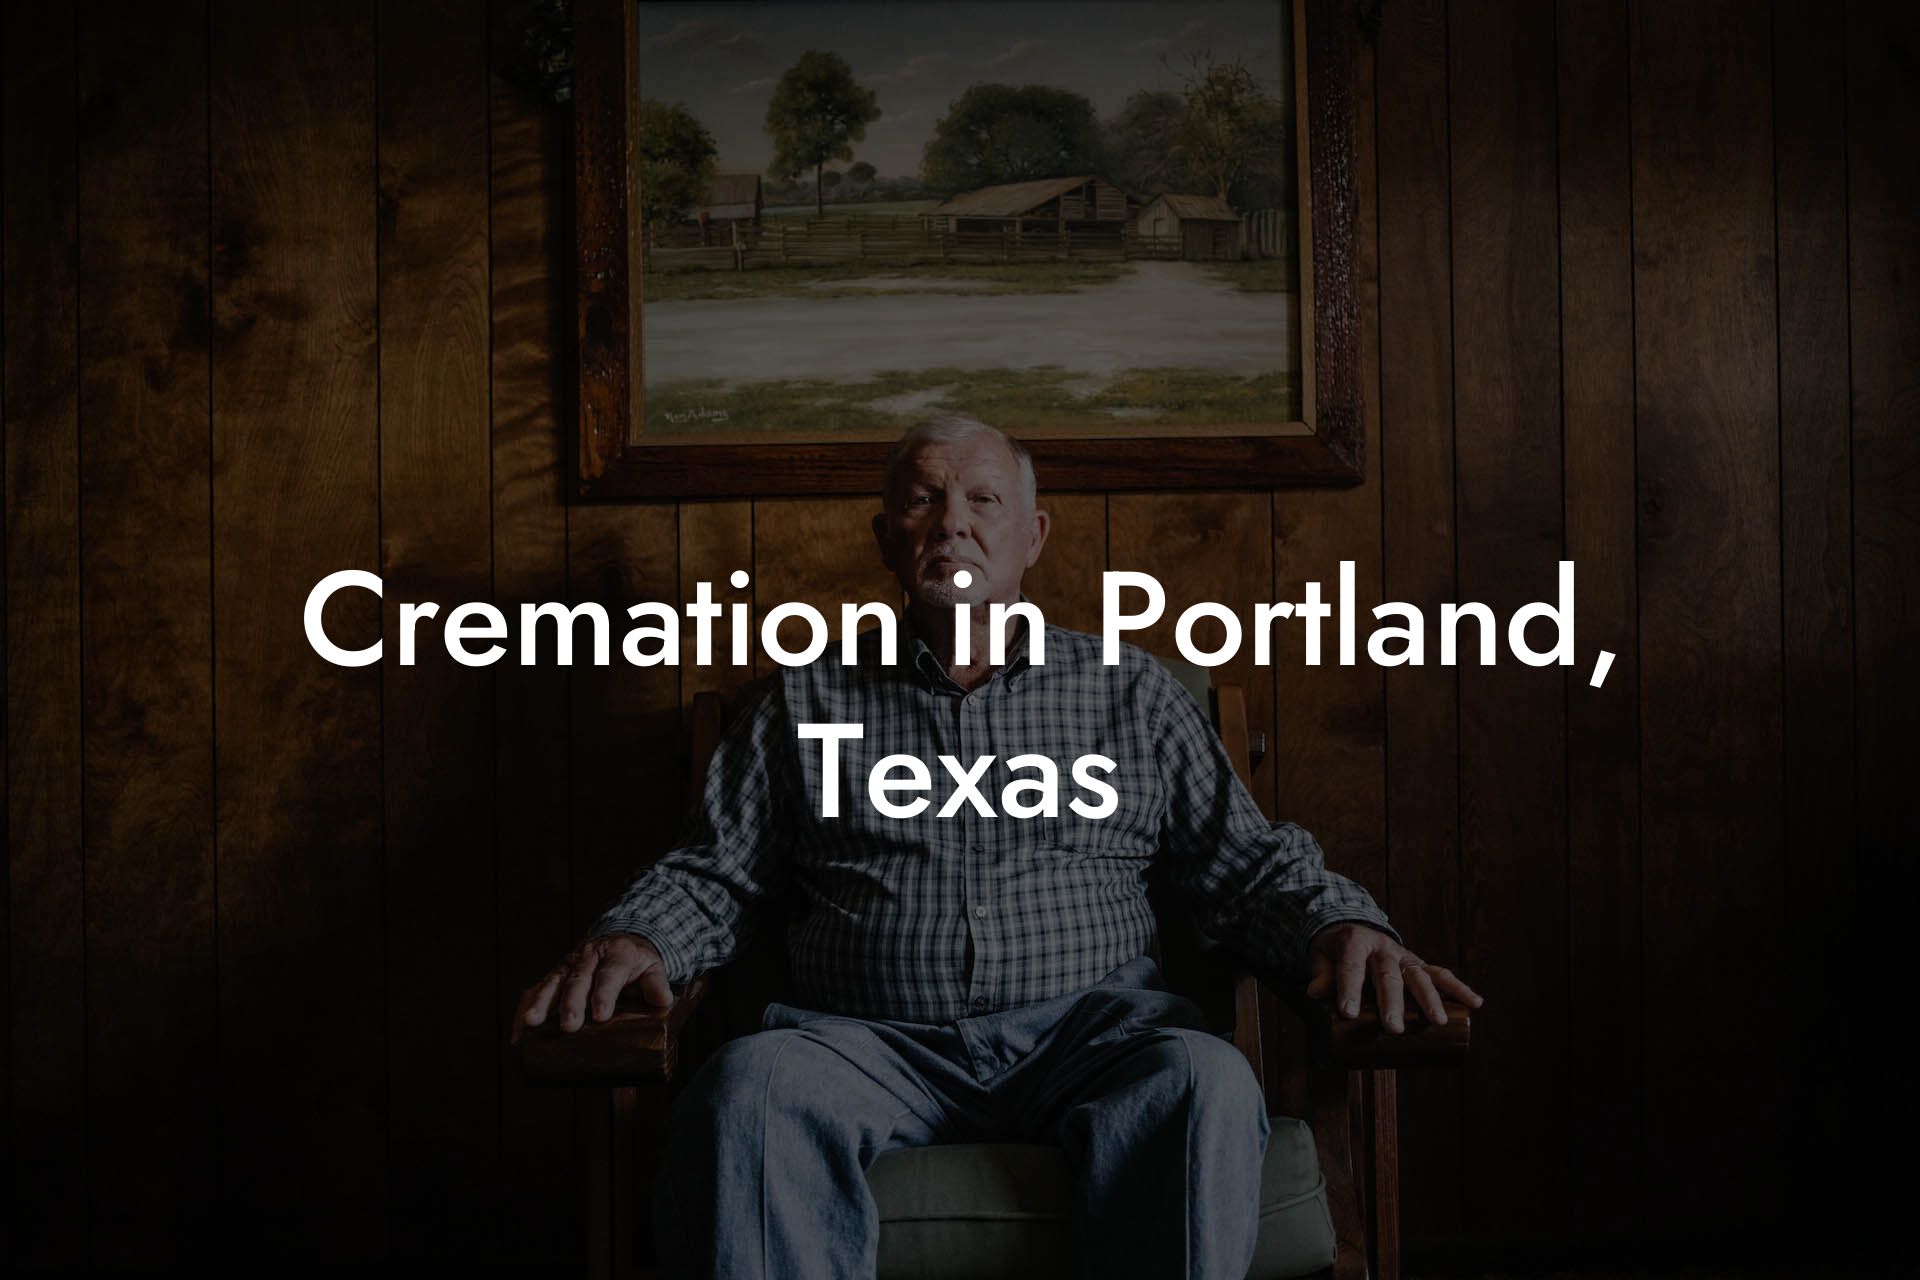 Cremation in Portland, Texas